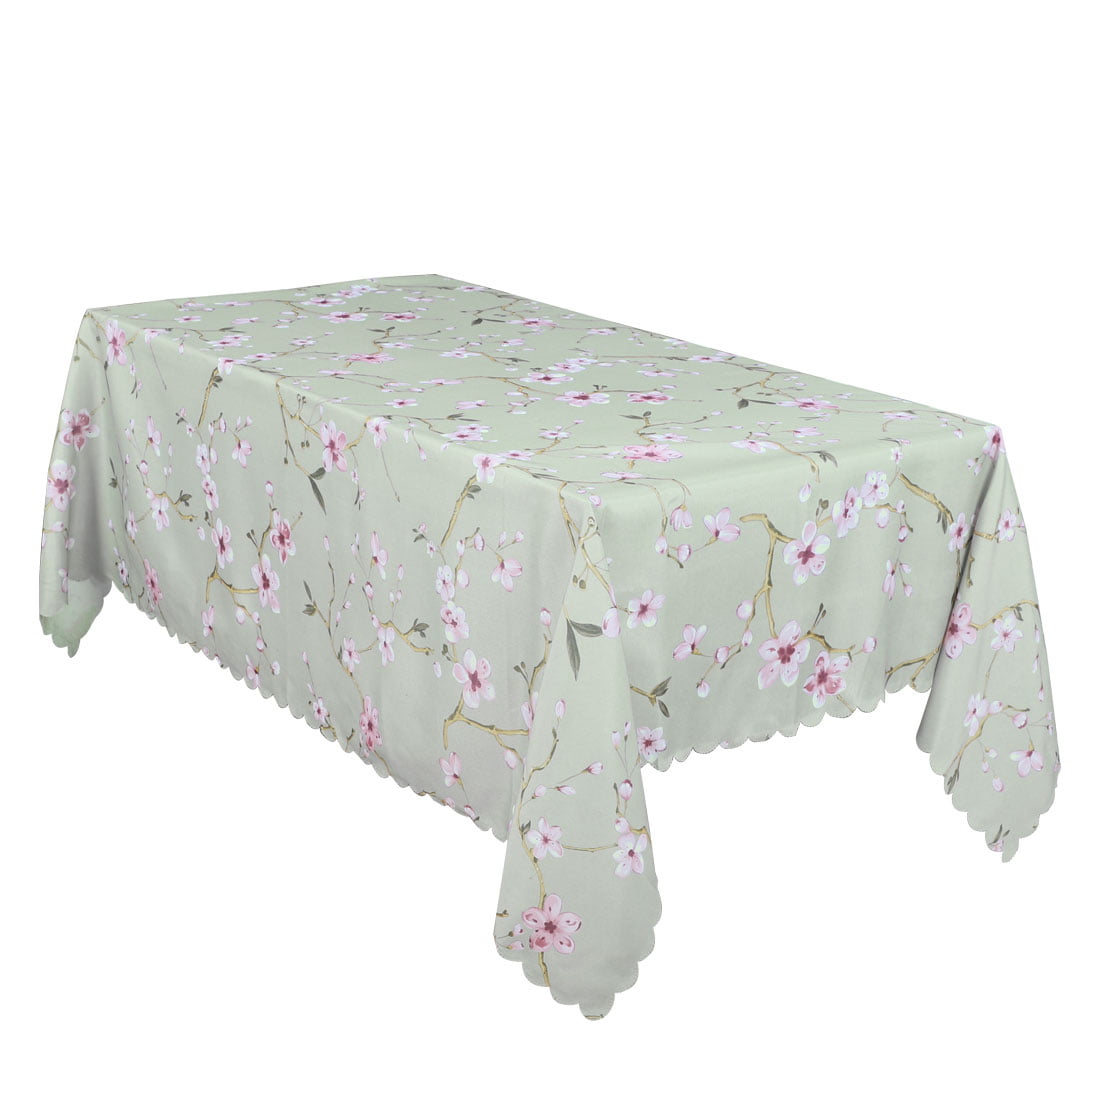 Square cream or white lace tablecloth NEW 140cm x 140cm elegant gift 55/" x 55/"